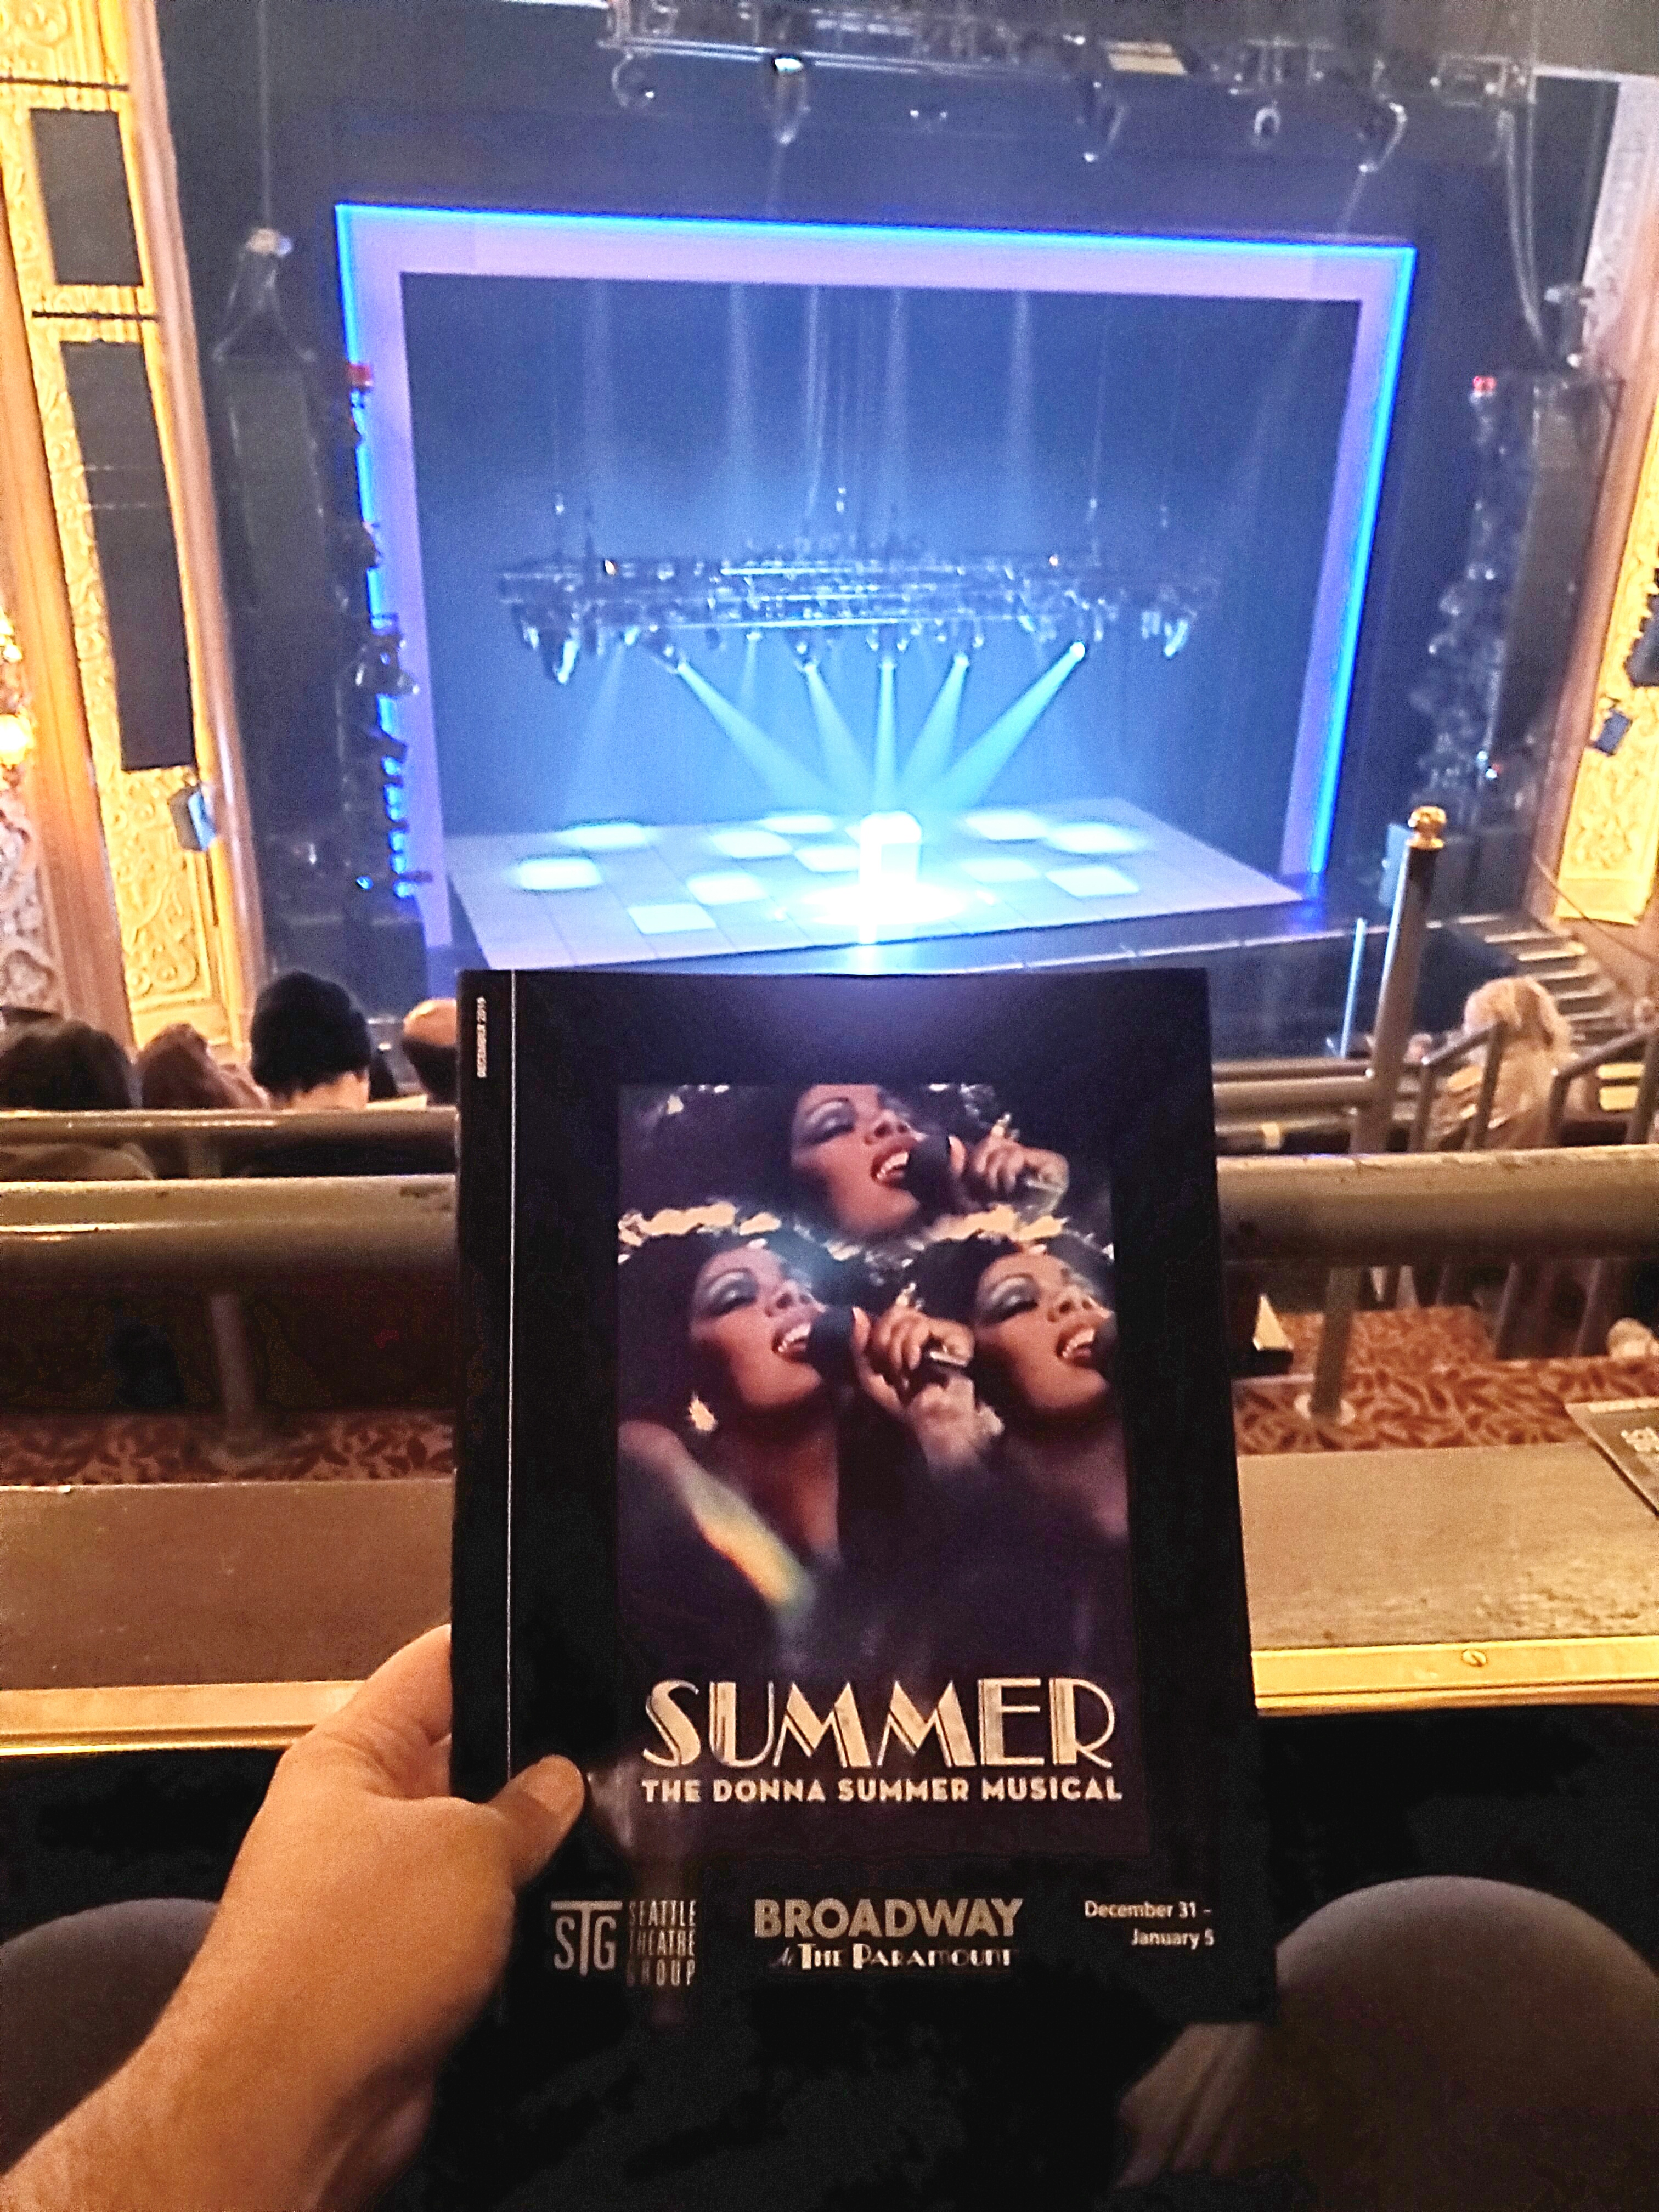 The Donna Summer Musical w/ Seattle Theatre Group. Amazing Donna Summer #divas. Great light show. Exquisite minimalist modern set design. But the transitions & storyline pace were #awkward & #tepid. #disco #DonnaSummer